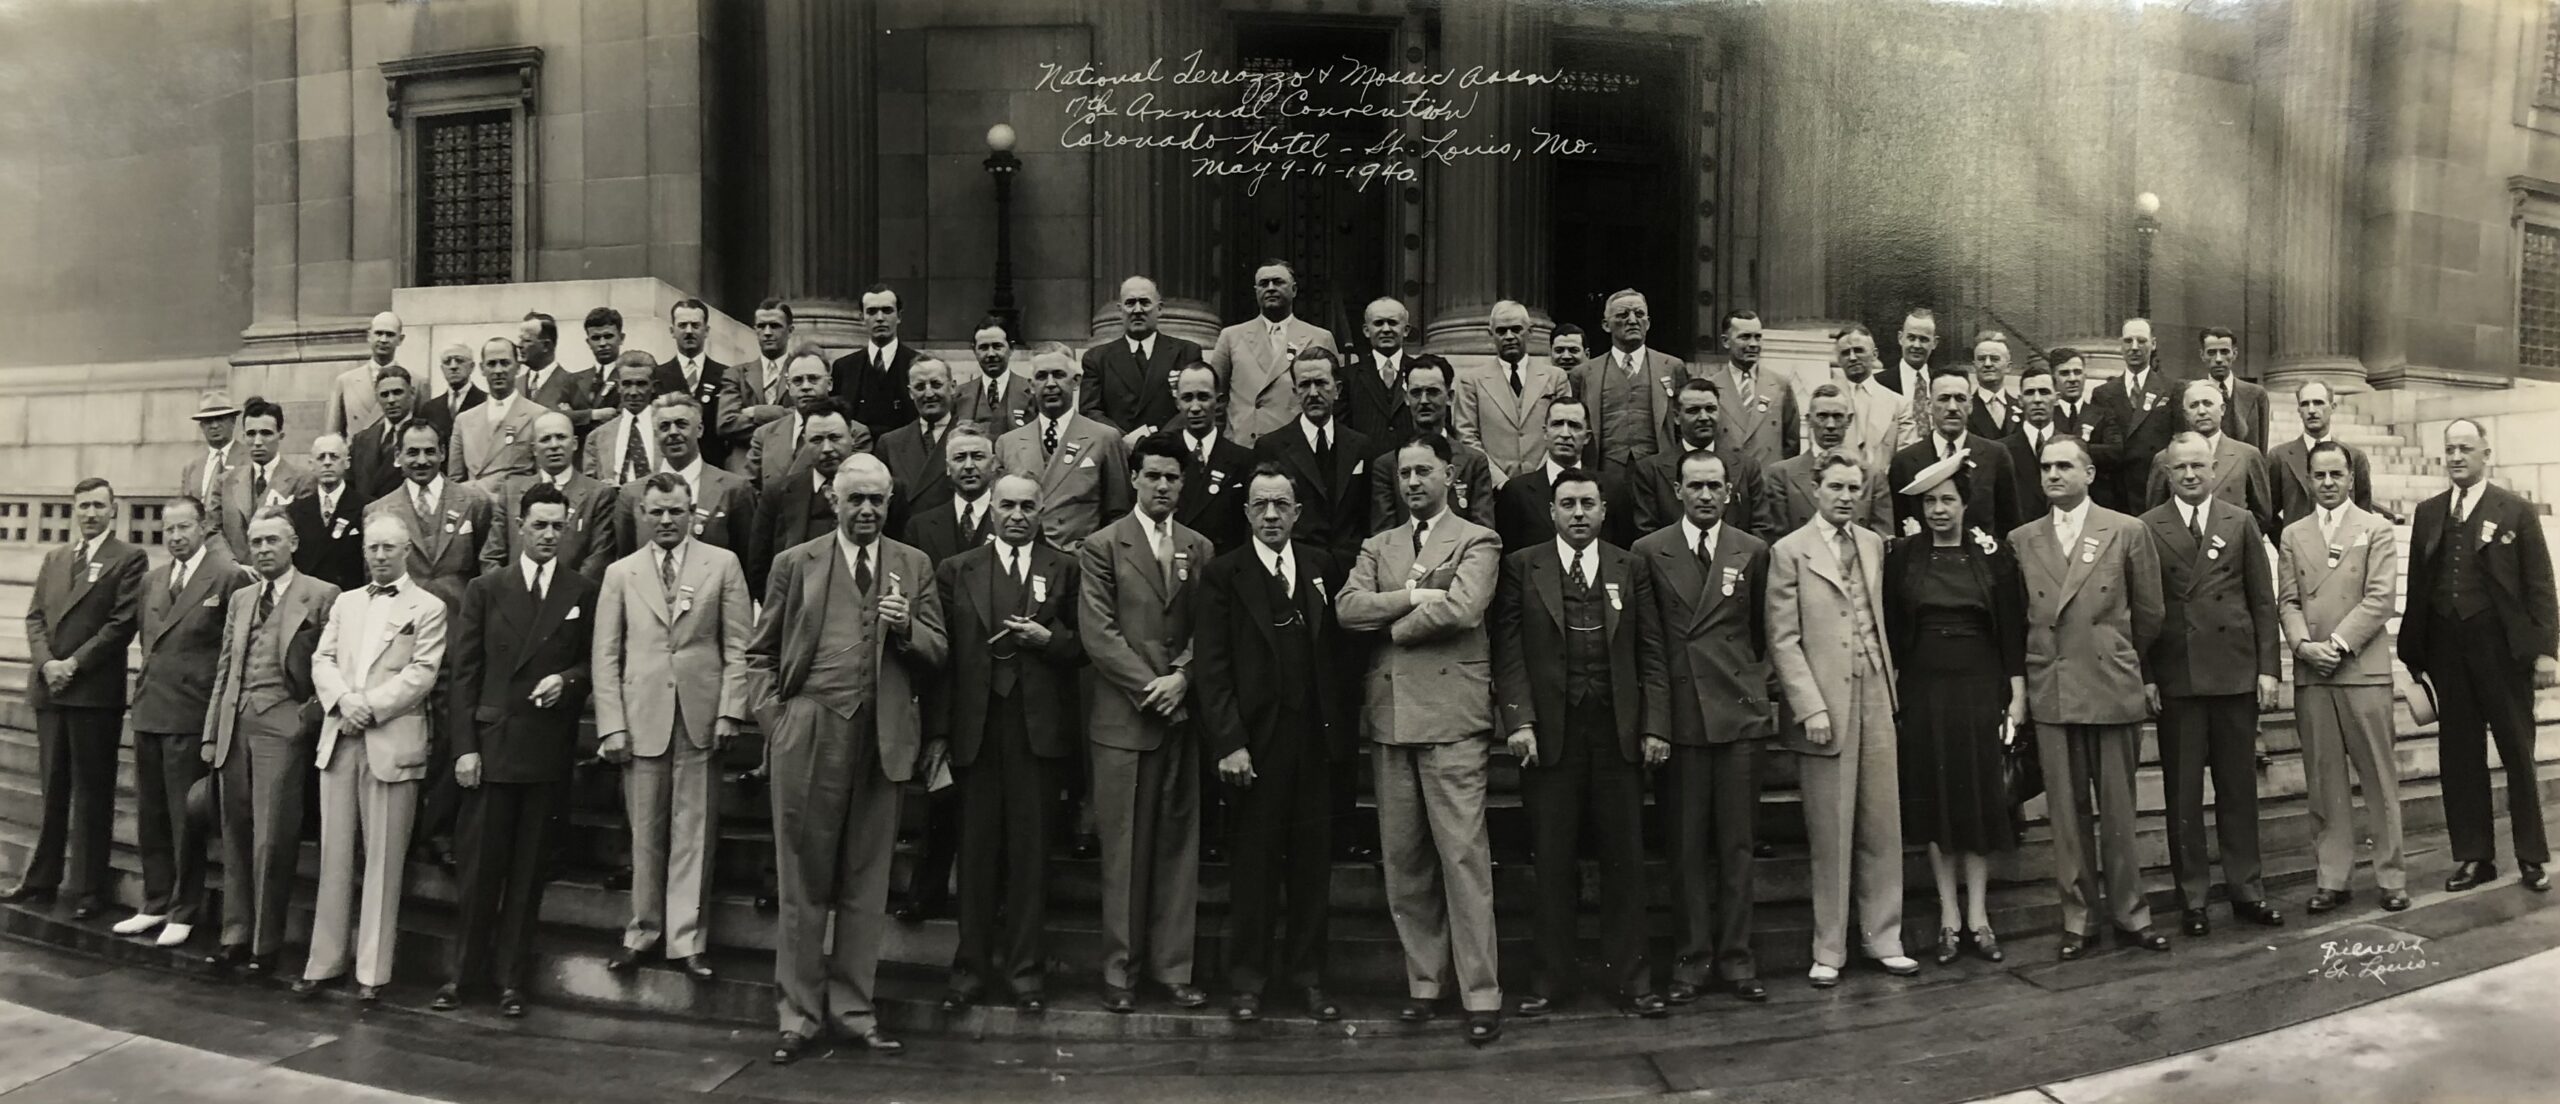 1940 17th Convention Contractors